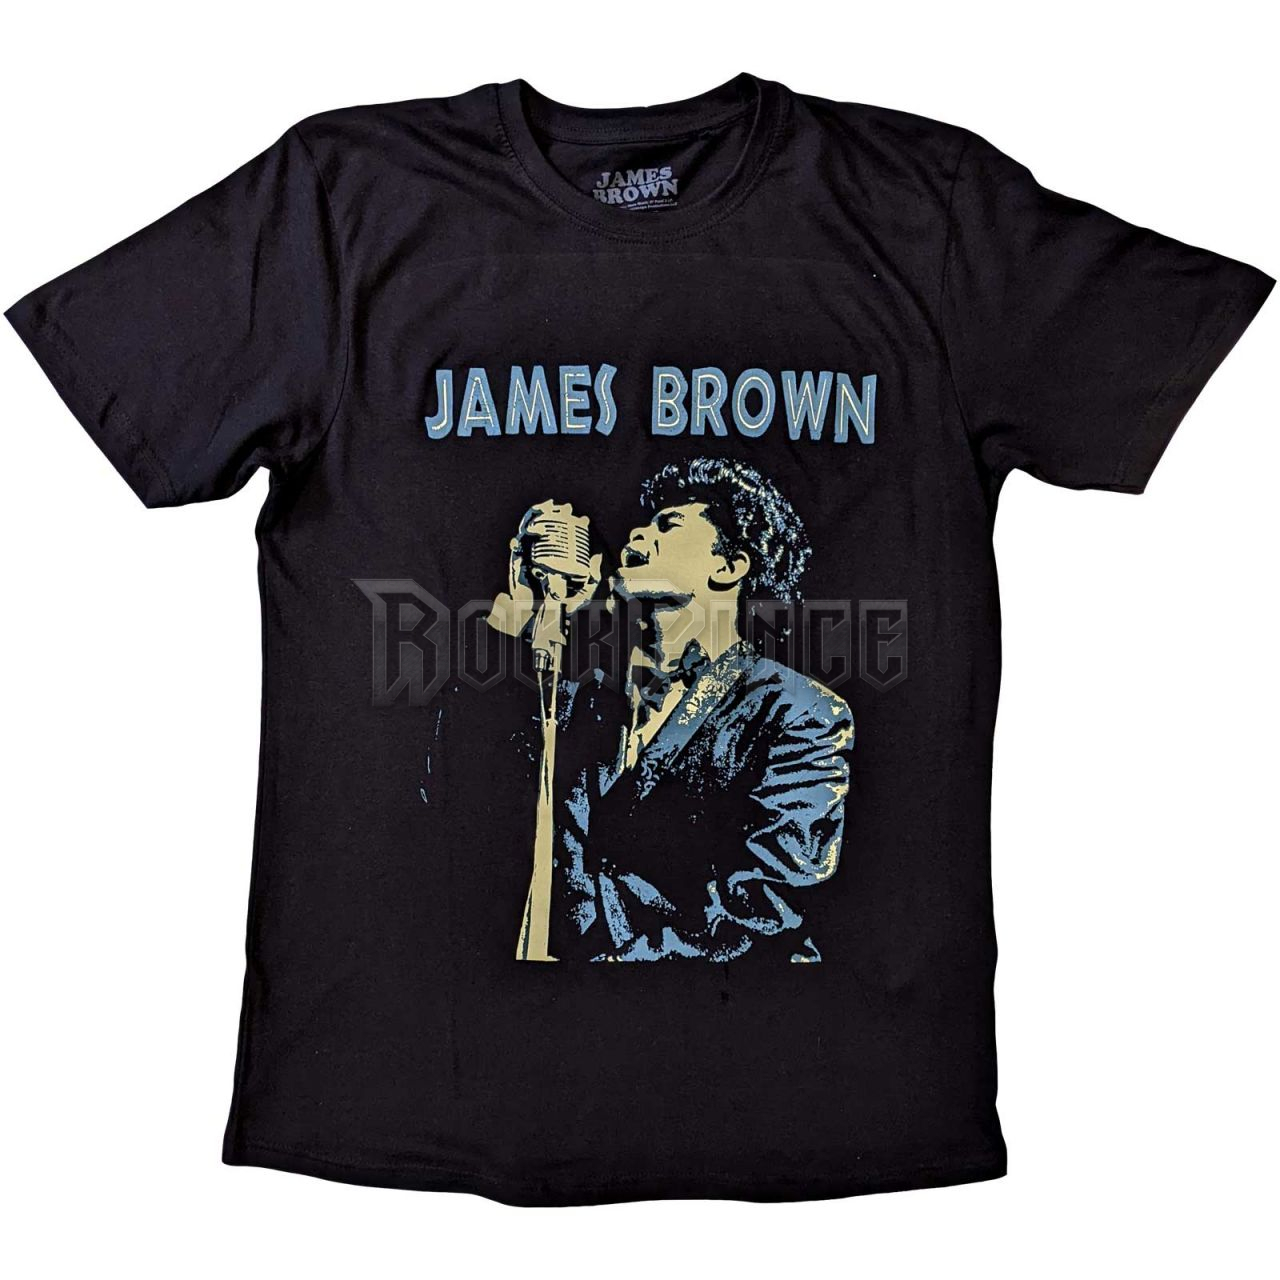 James Brown - Holding Mic - unisex póló - JABRTS03MB